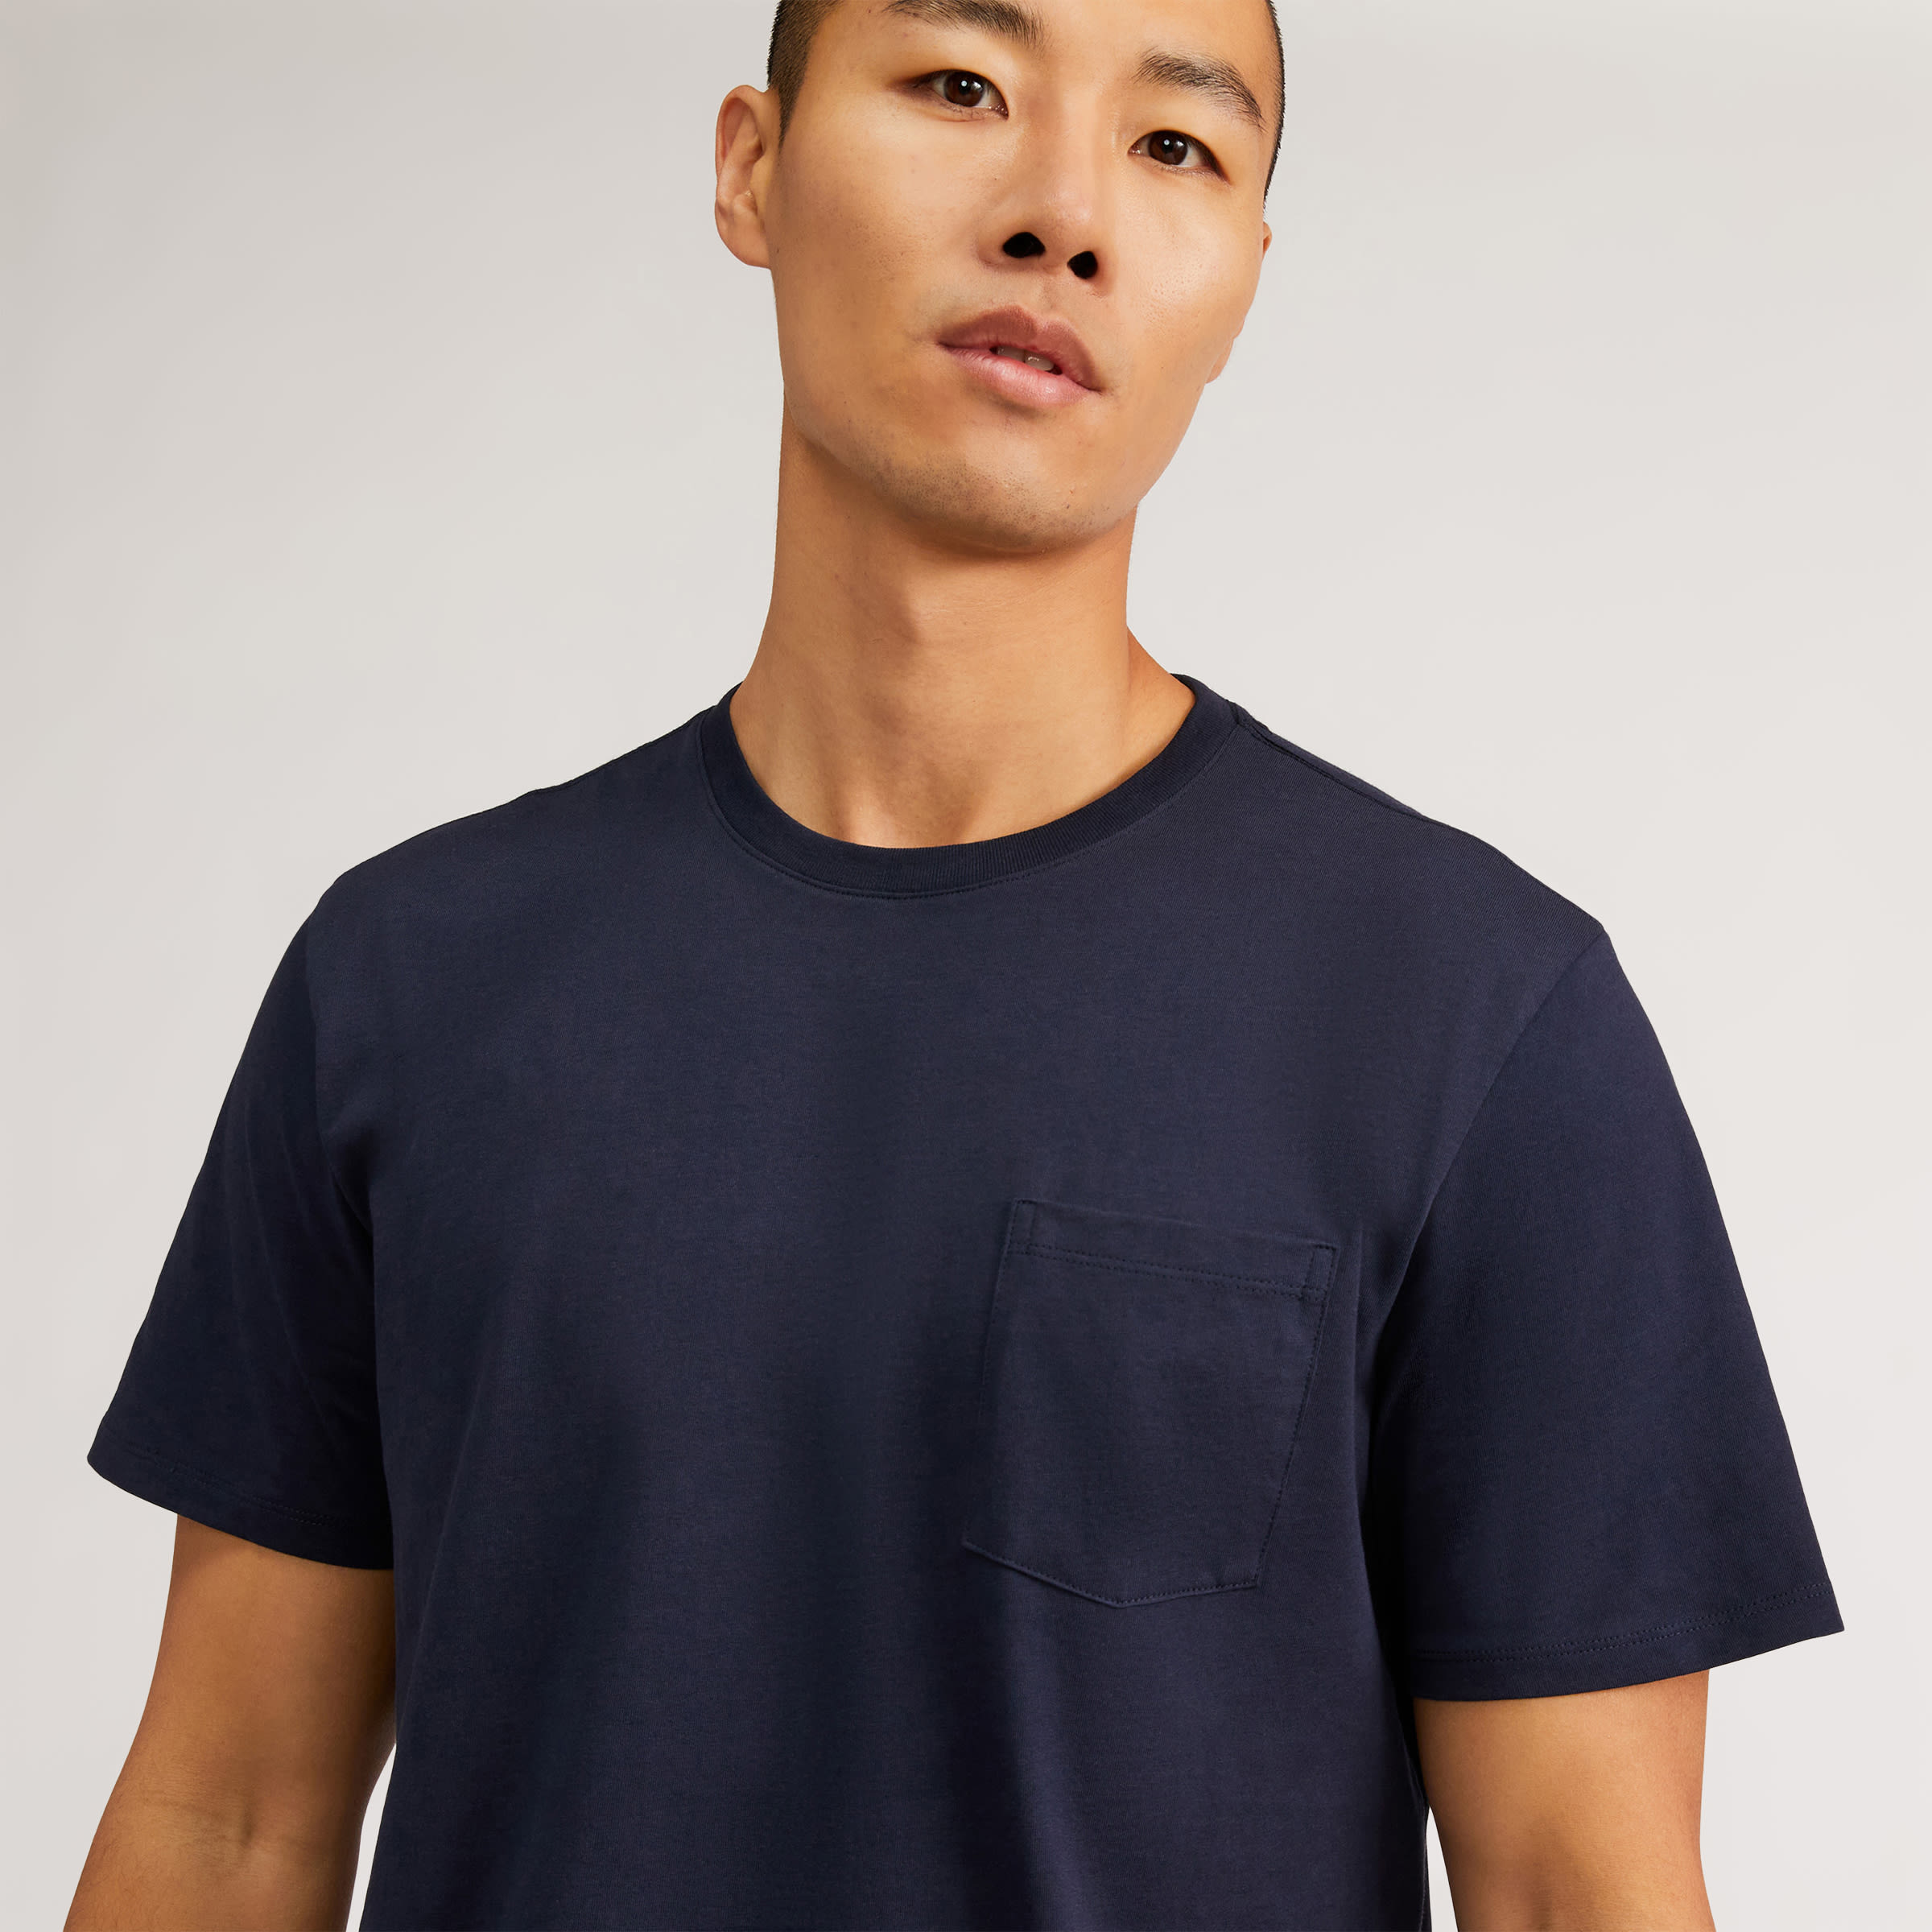 Everlane Men's Premium-Weight Pocket T-Shirt